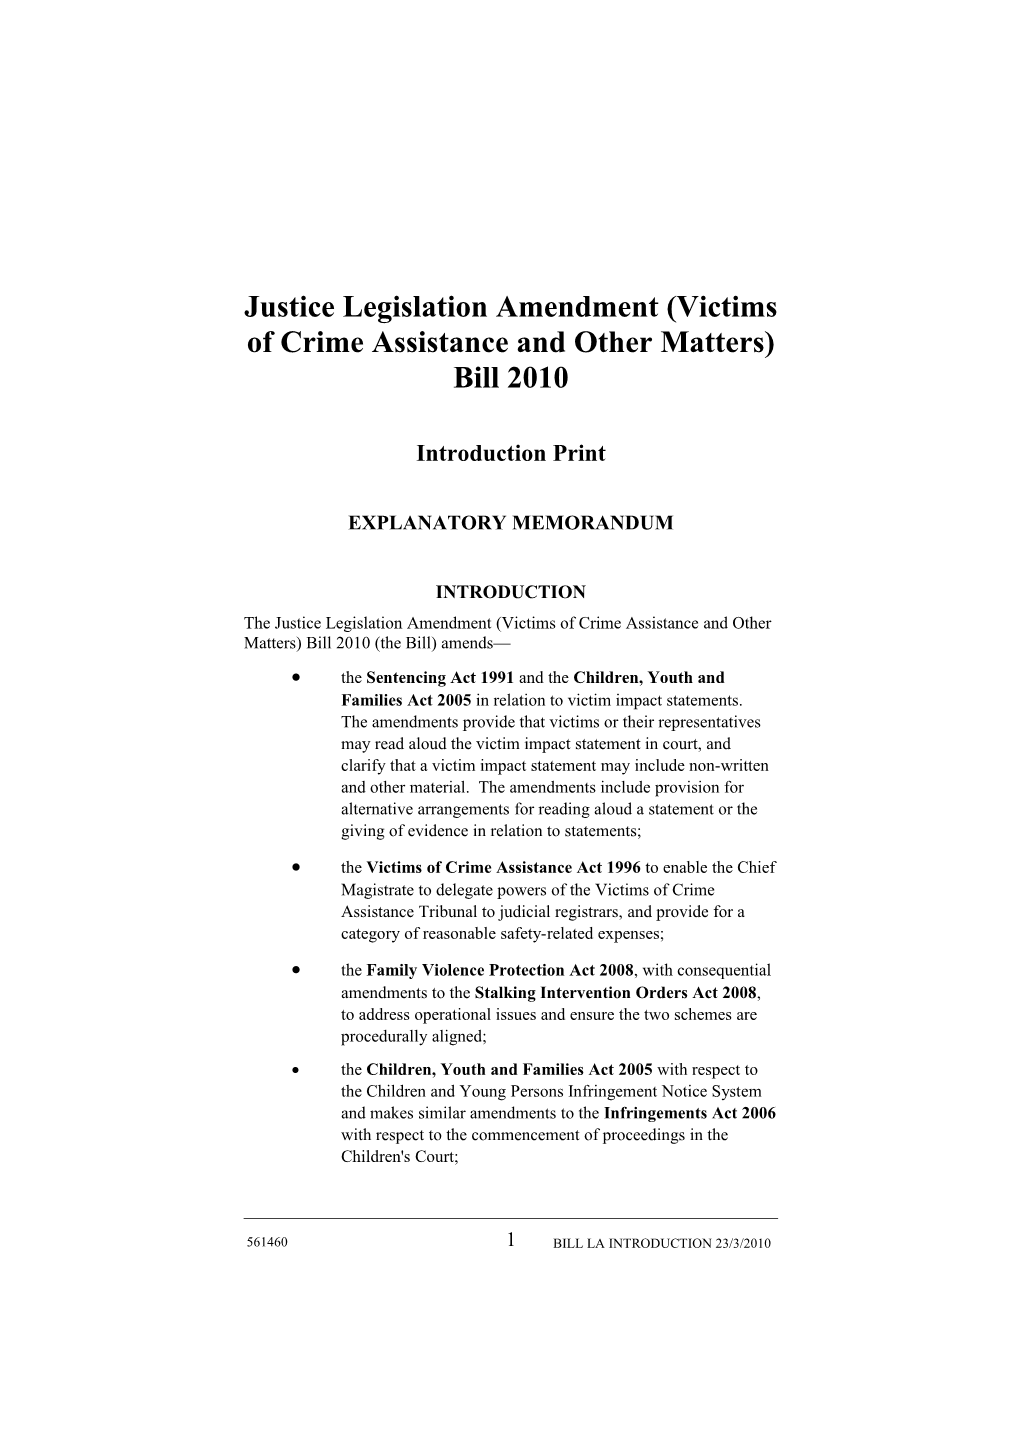 Justice Legislation Amendment (Victims of Crime Assistance and Other Matters) Bill 2010